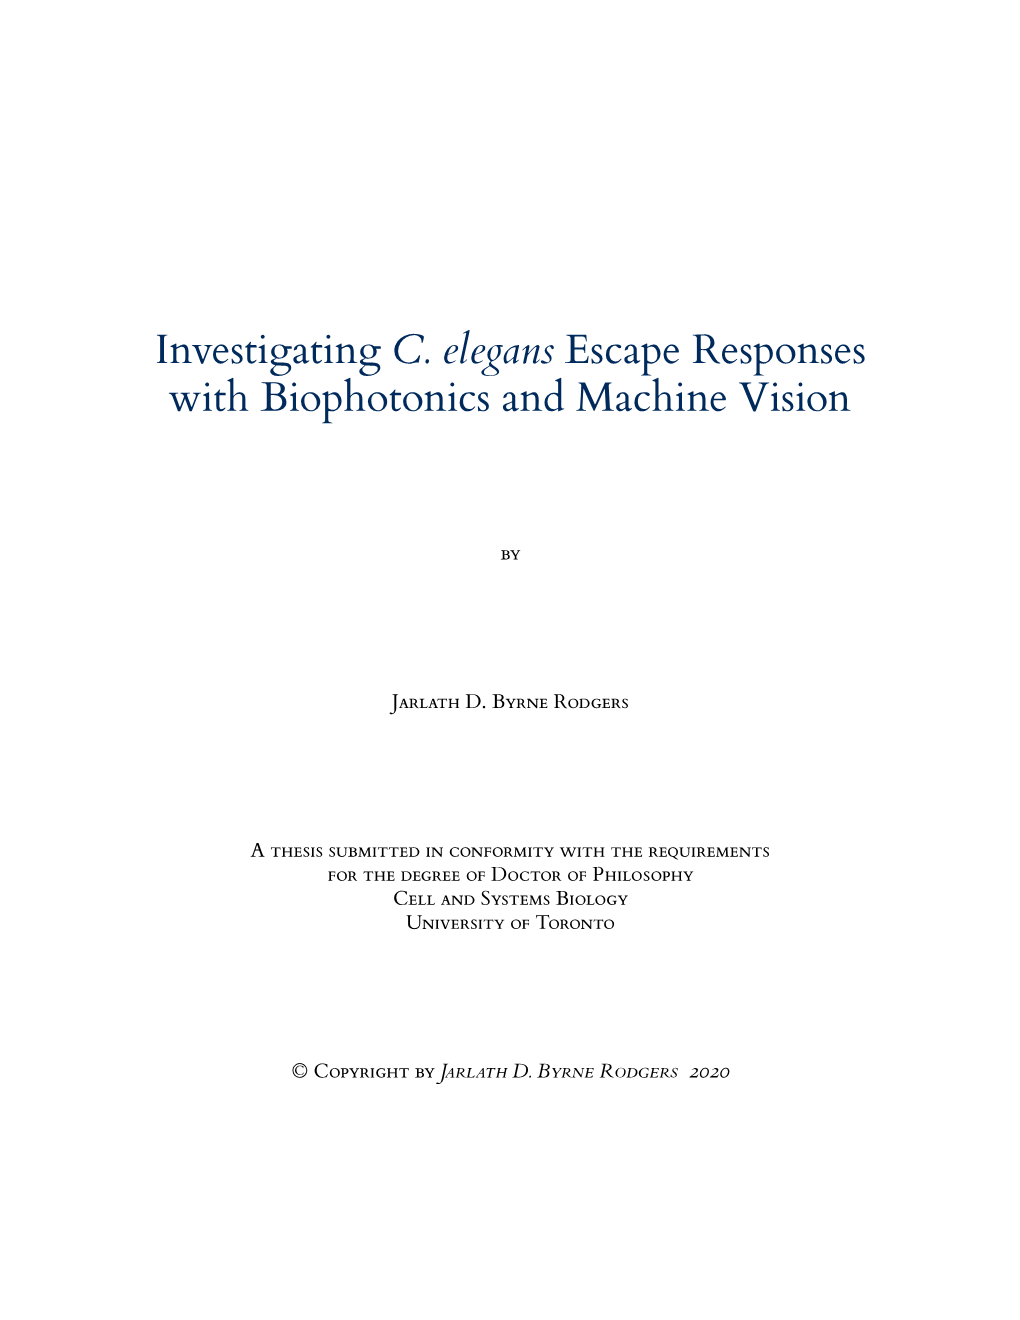 Investigating C. Elegans Escape Responses with Biophotonics and Machine Vision